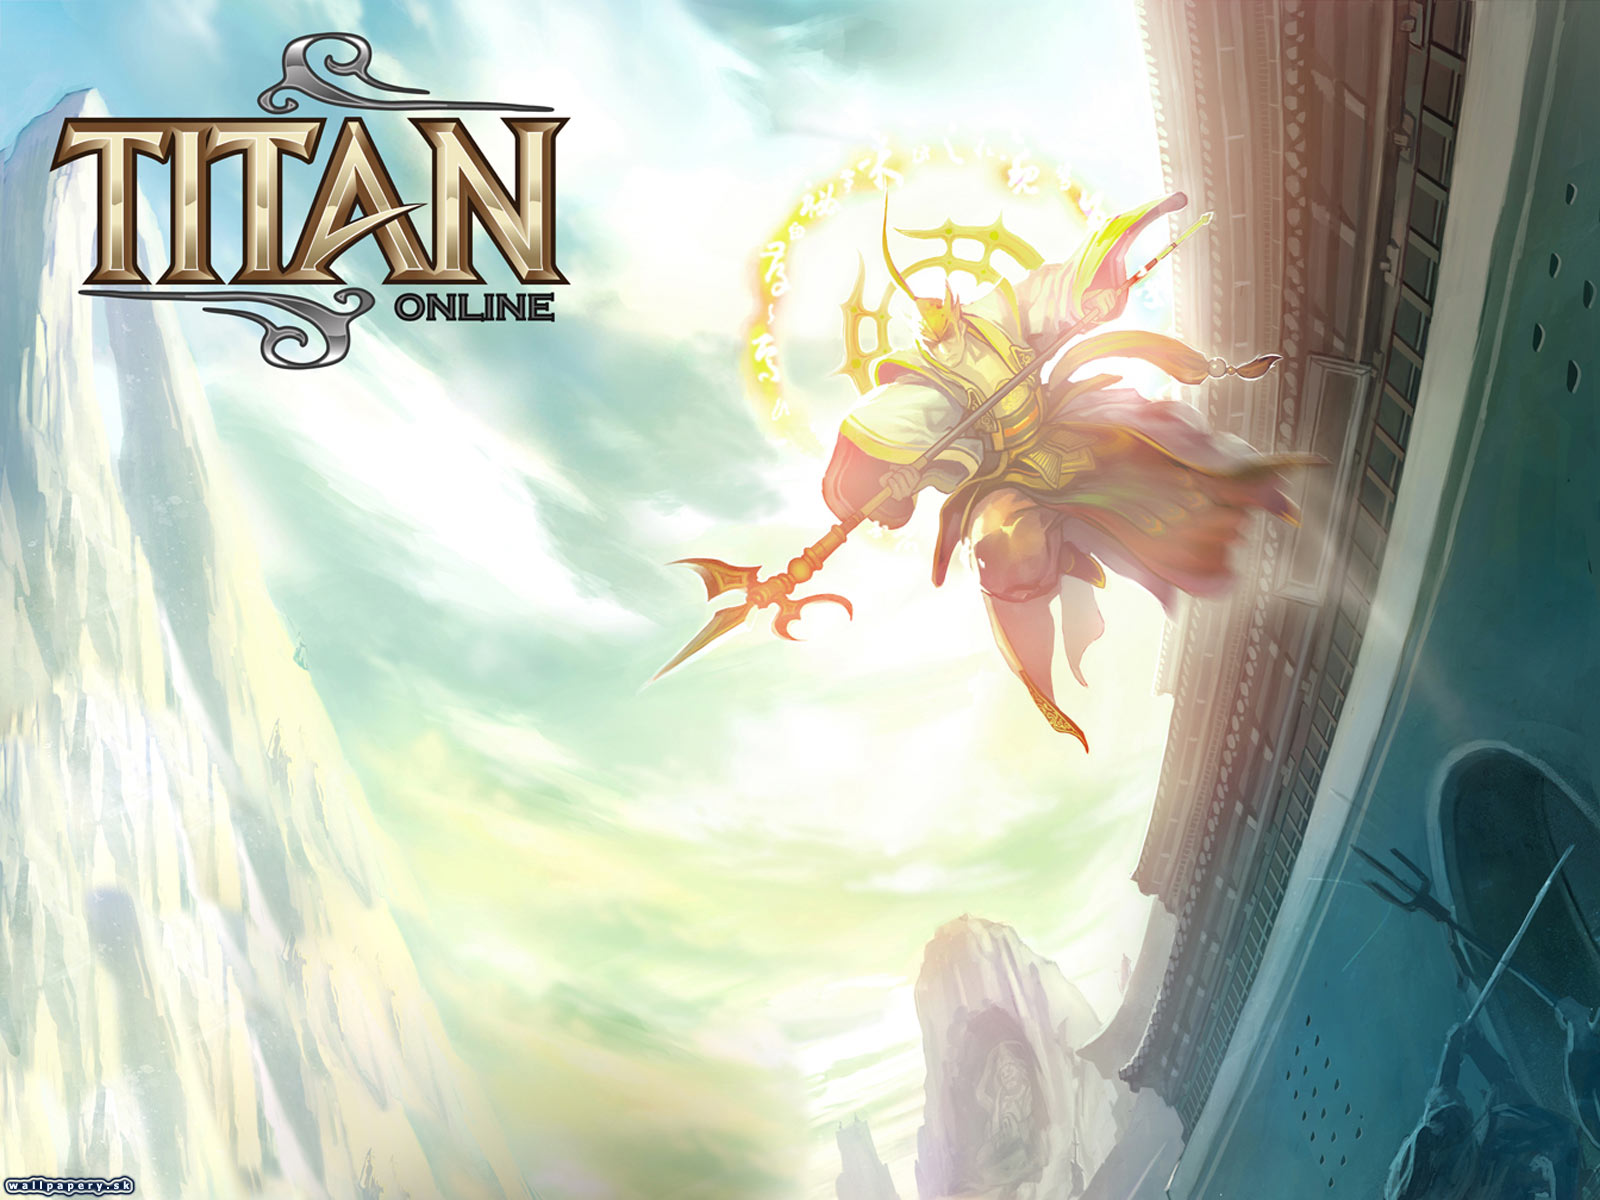 Titan Online - wallpaper 2